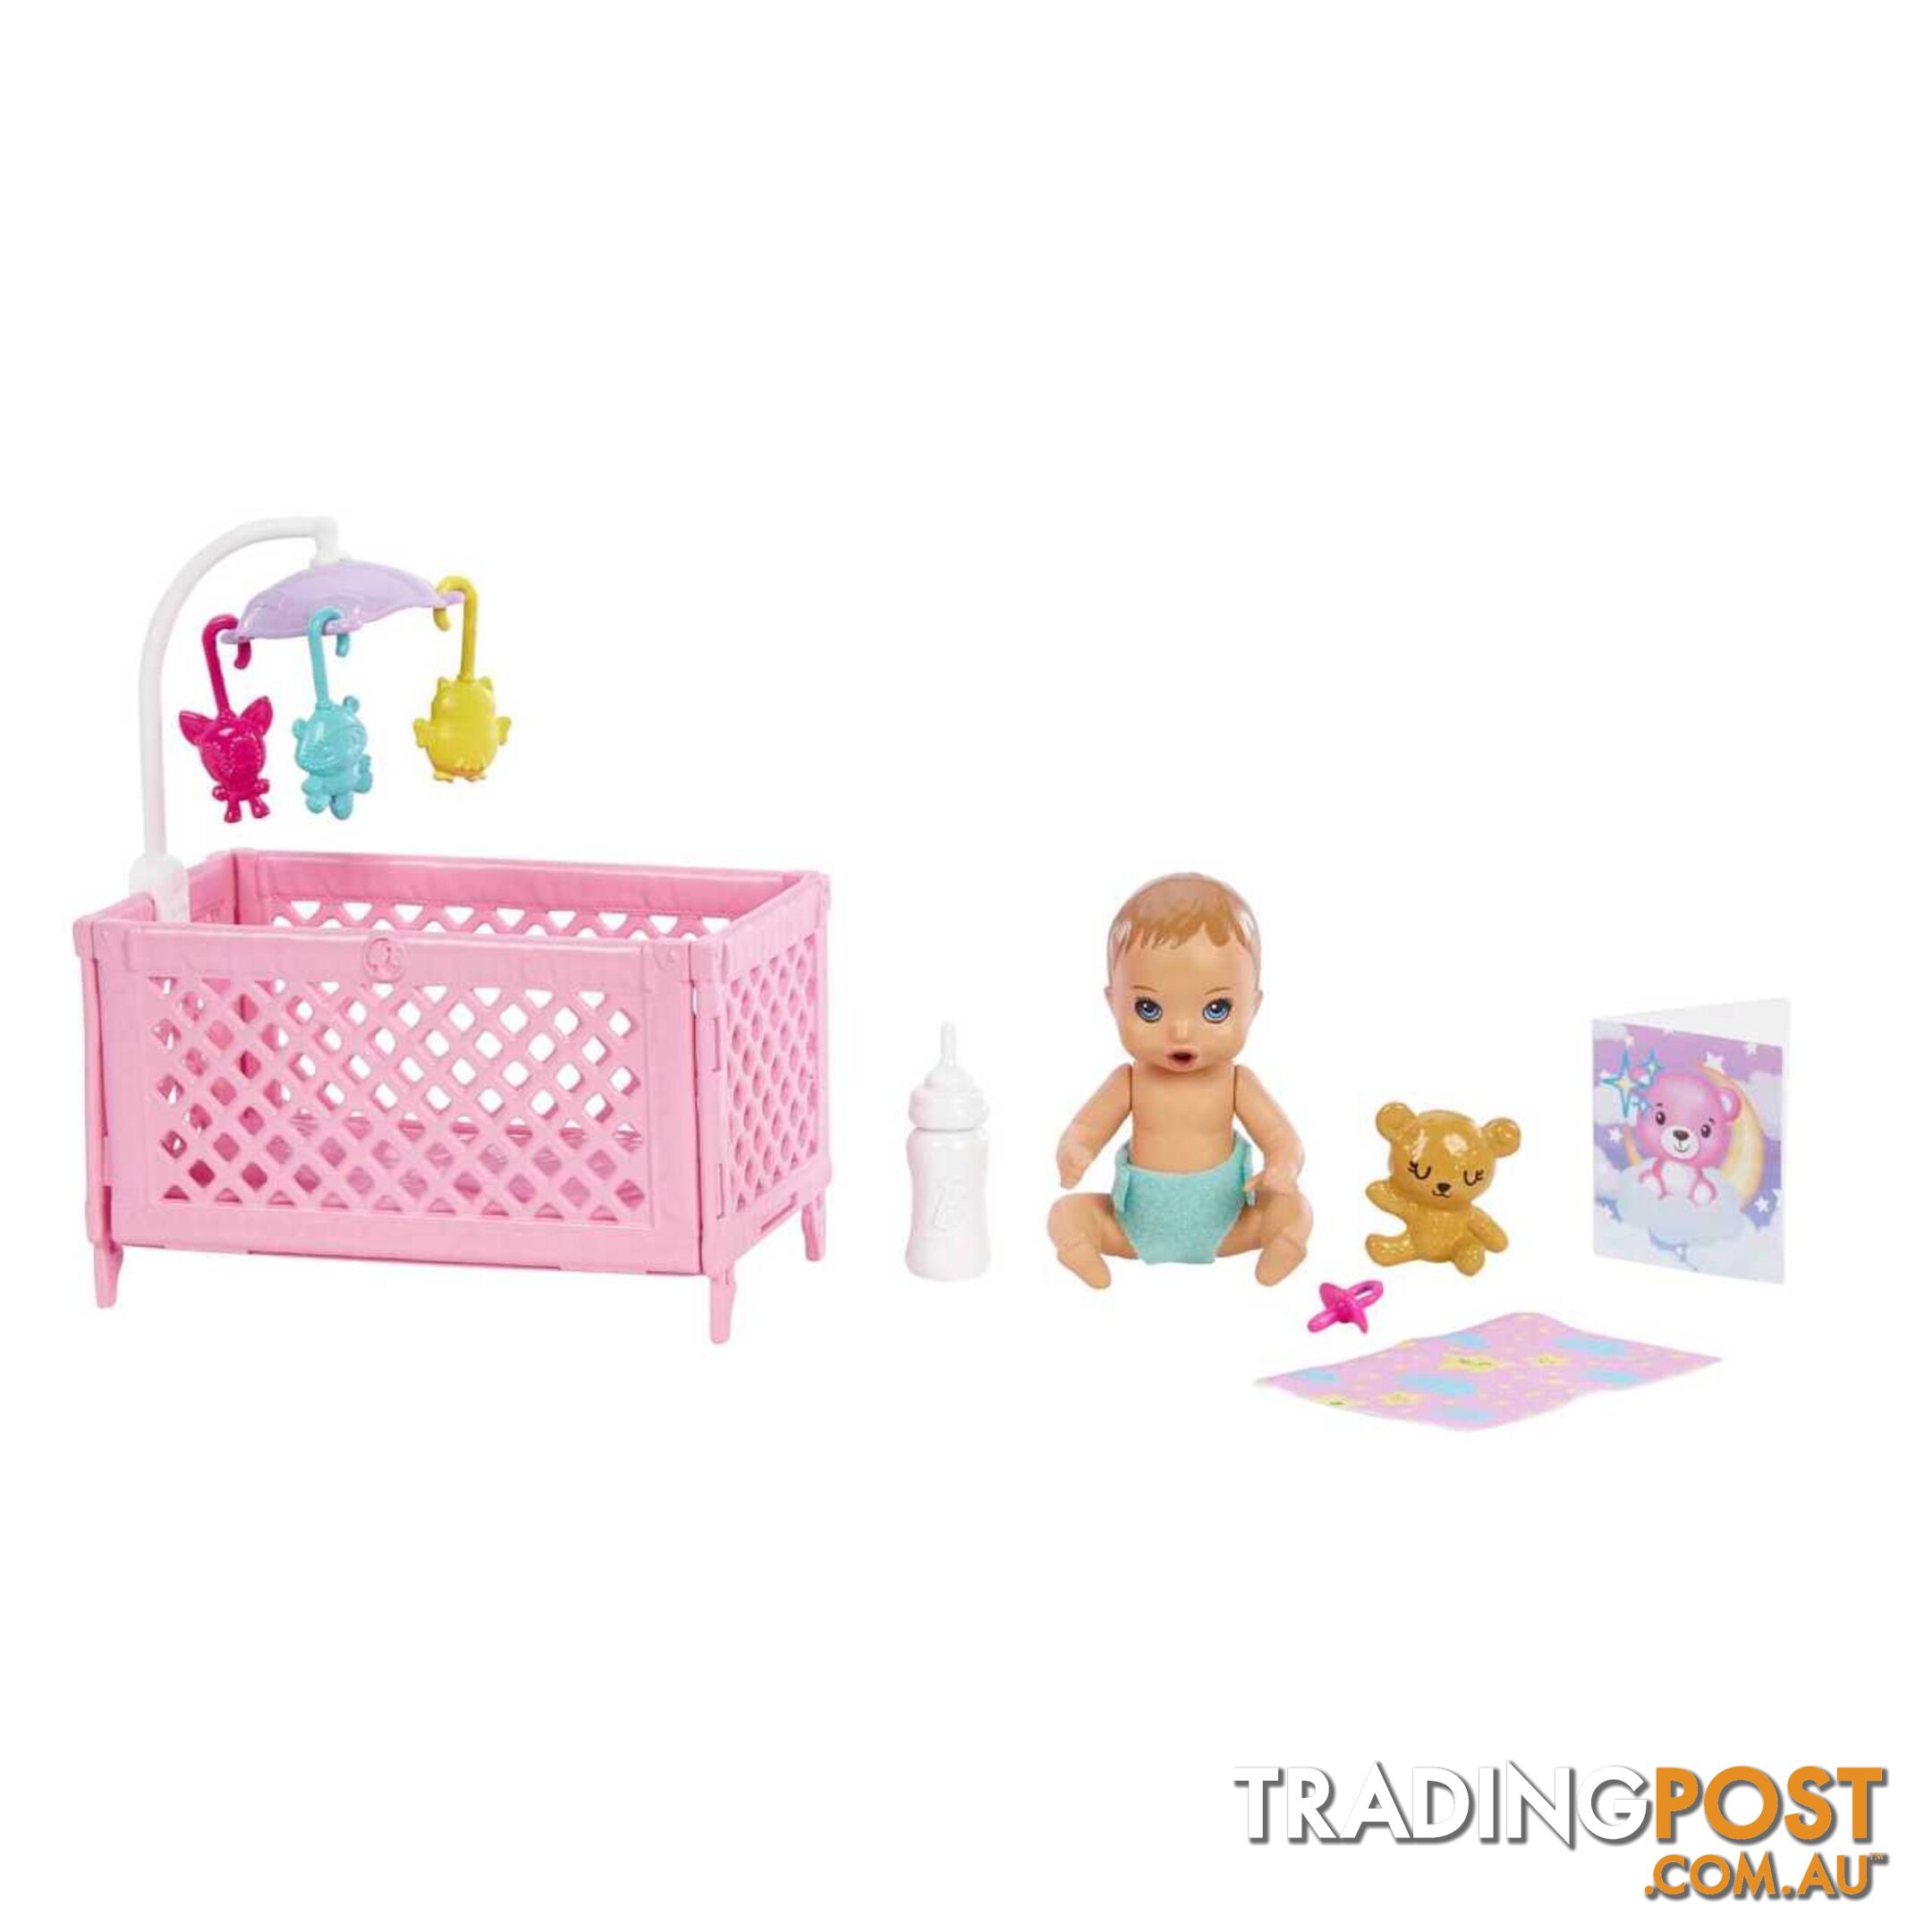 Barbie Skipper Babysitters Incâ„¢ Dolls and Playset - Mahjy33 - 194735098262